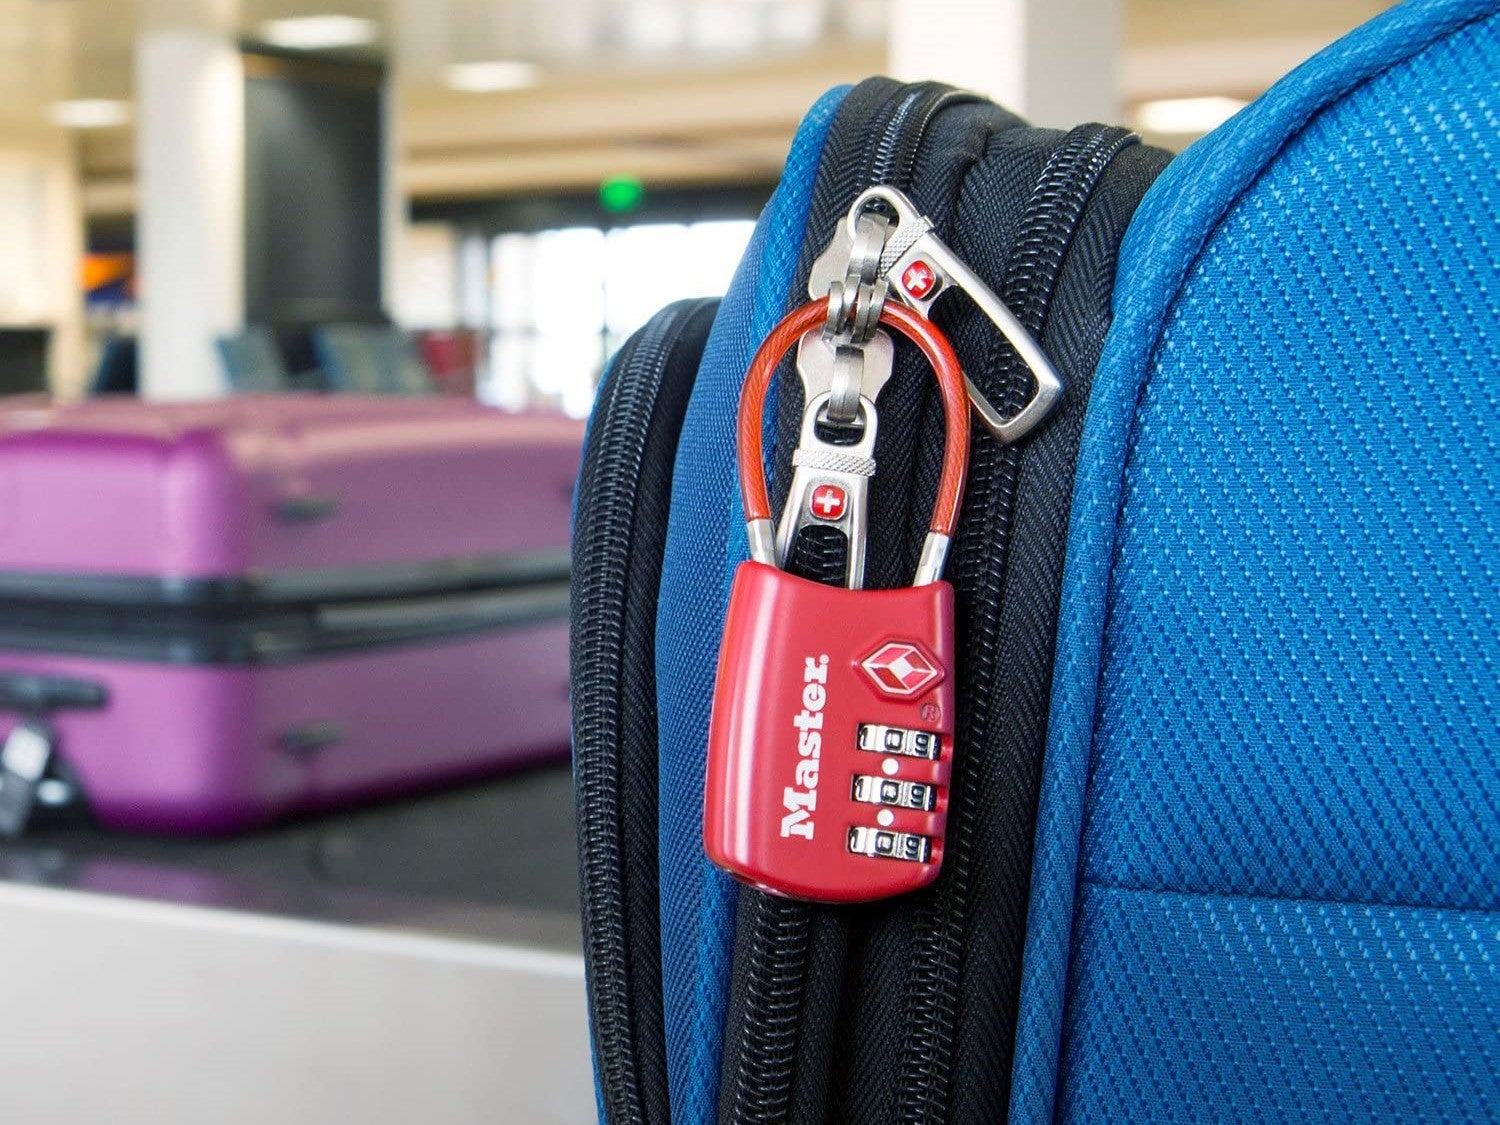 Code Lock for Travel Suitcases Luggage Bag Case Combination Padlock Silver Luggage Locks 5-Digit Security Padlock 